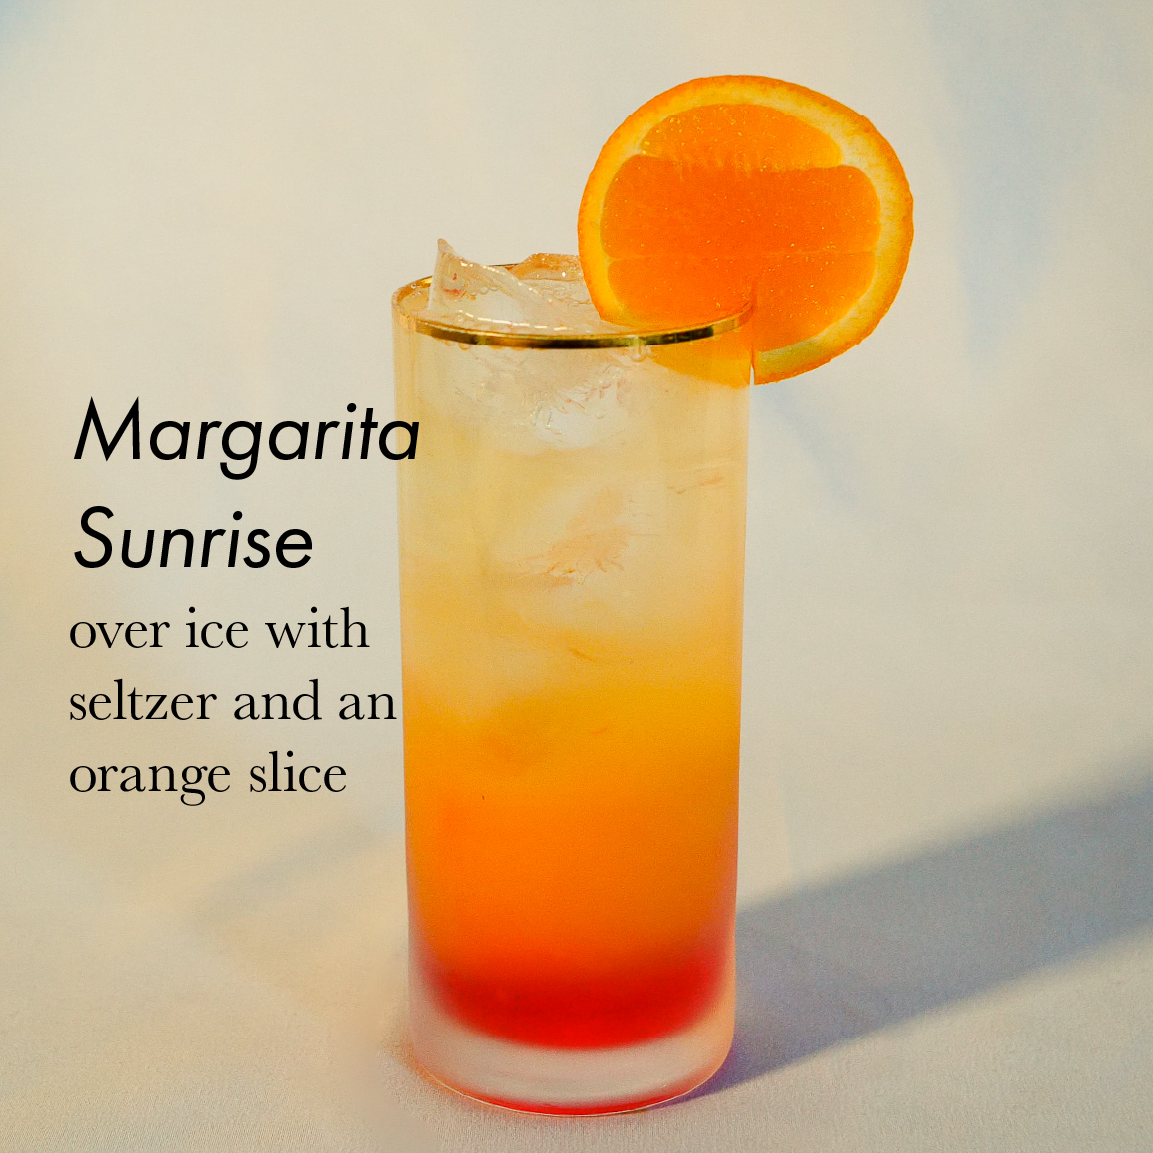 Margarita Sunrize in a glass with an orange slice